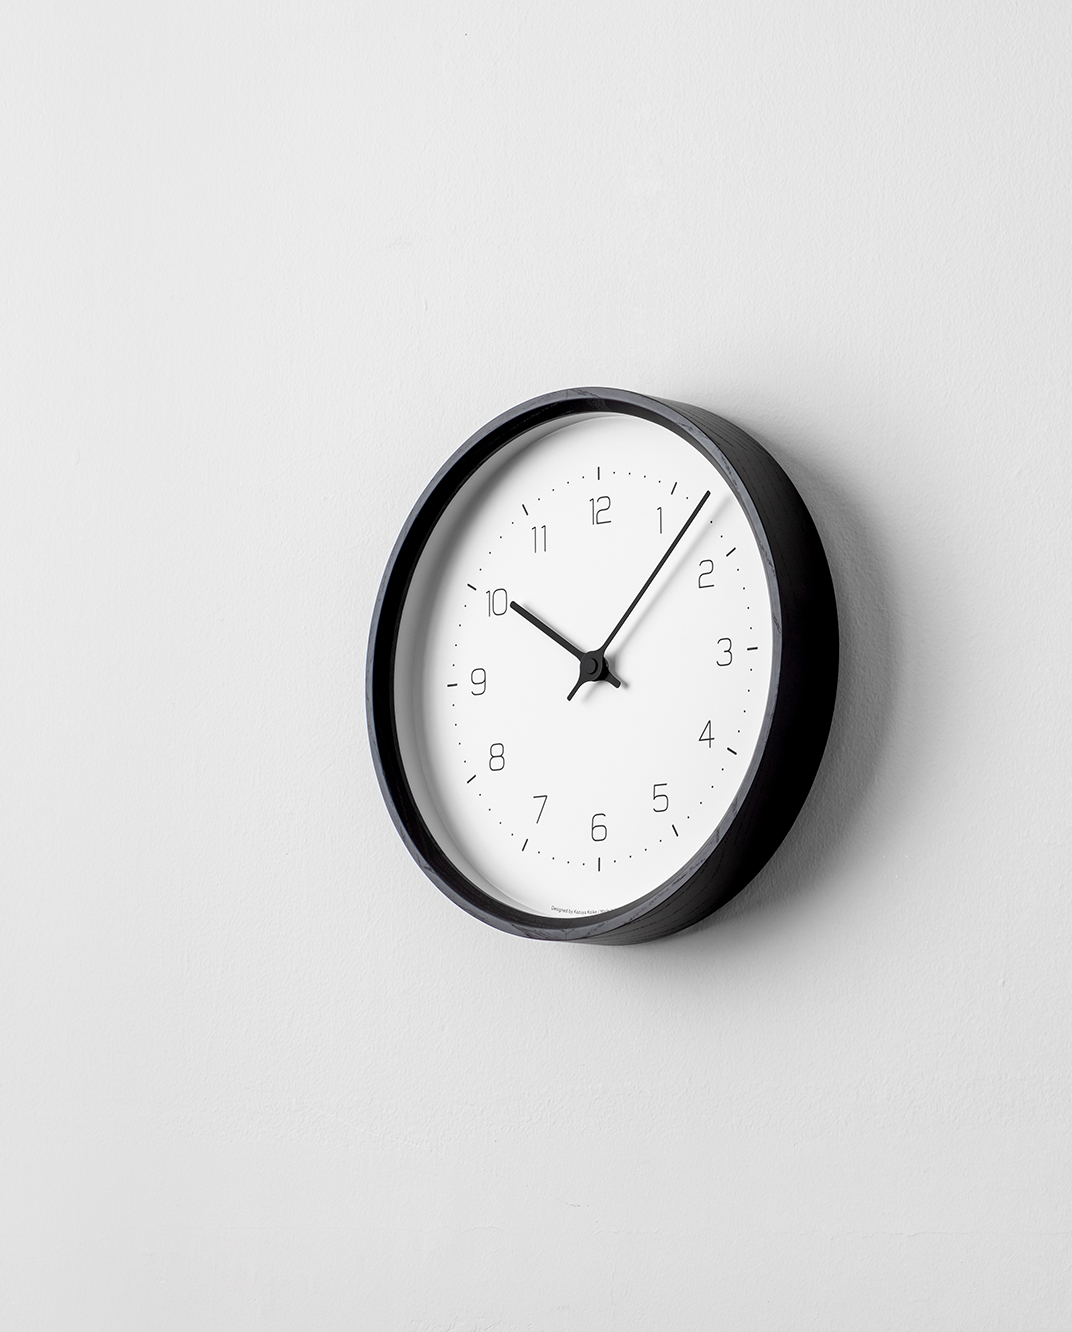 NEUT wall clock | Doogdesign. Inc. | Kazuya Koike / プロダクトデザイン事務所 大阪